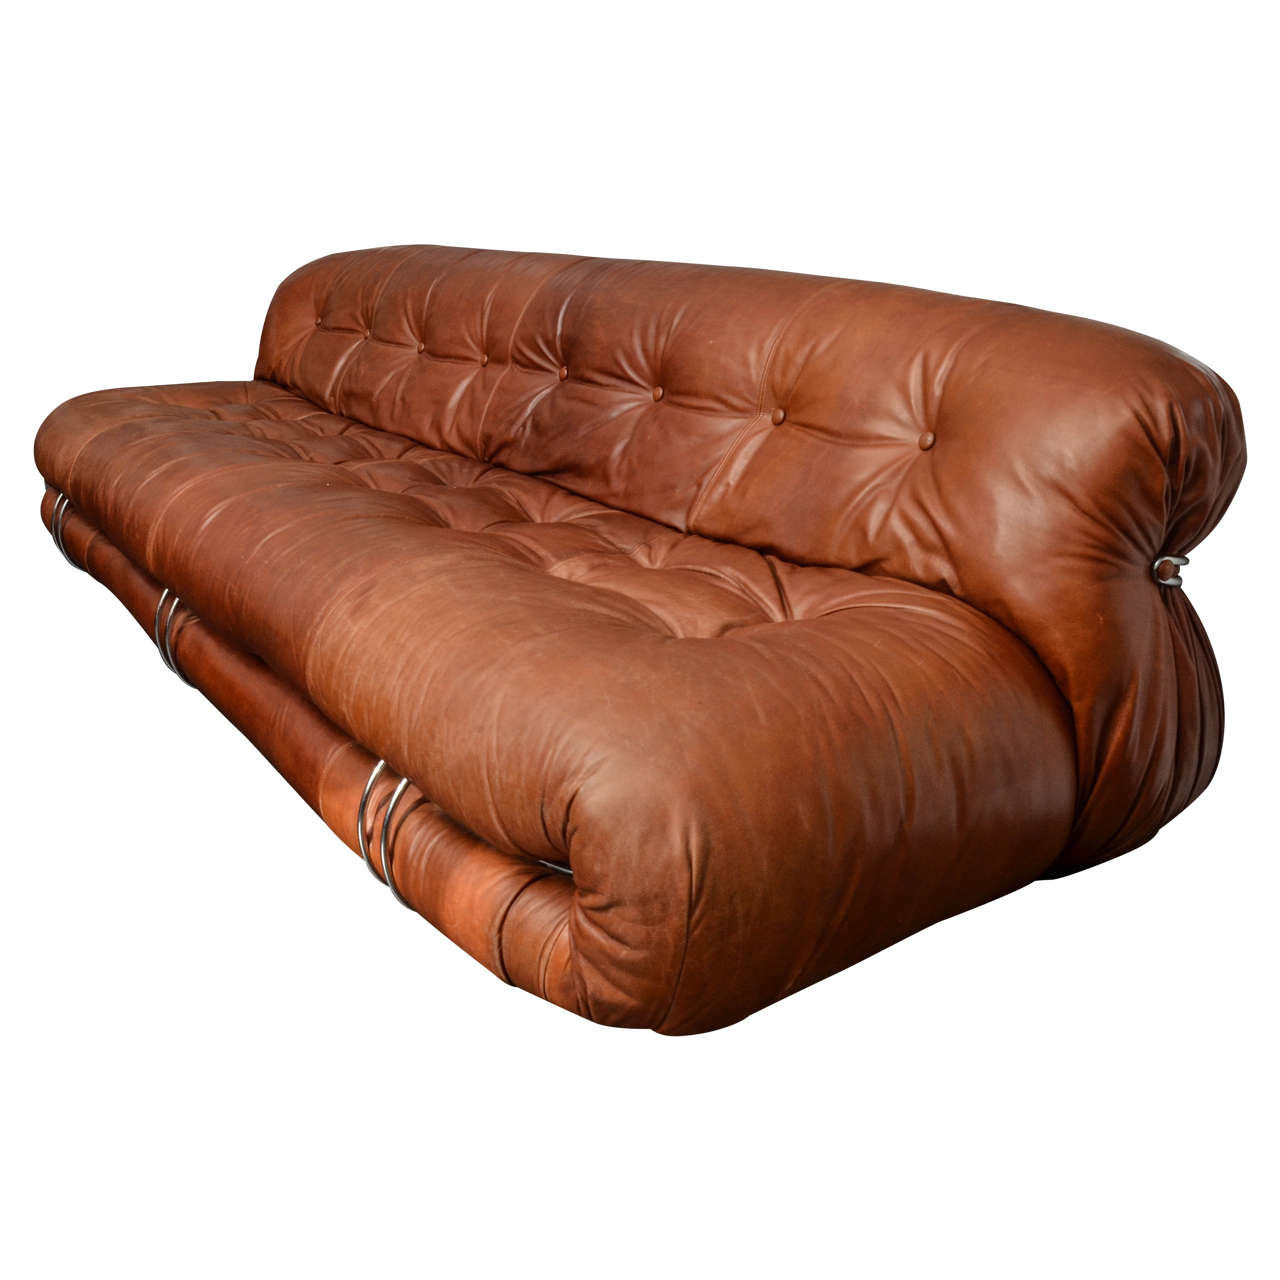 "Soriana" Tufted Leather Sofa by Tobia Scarpa